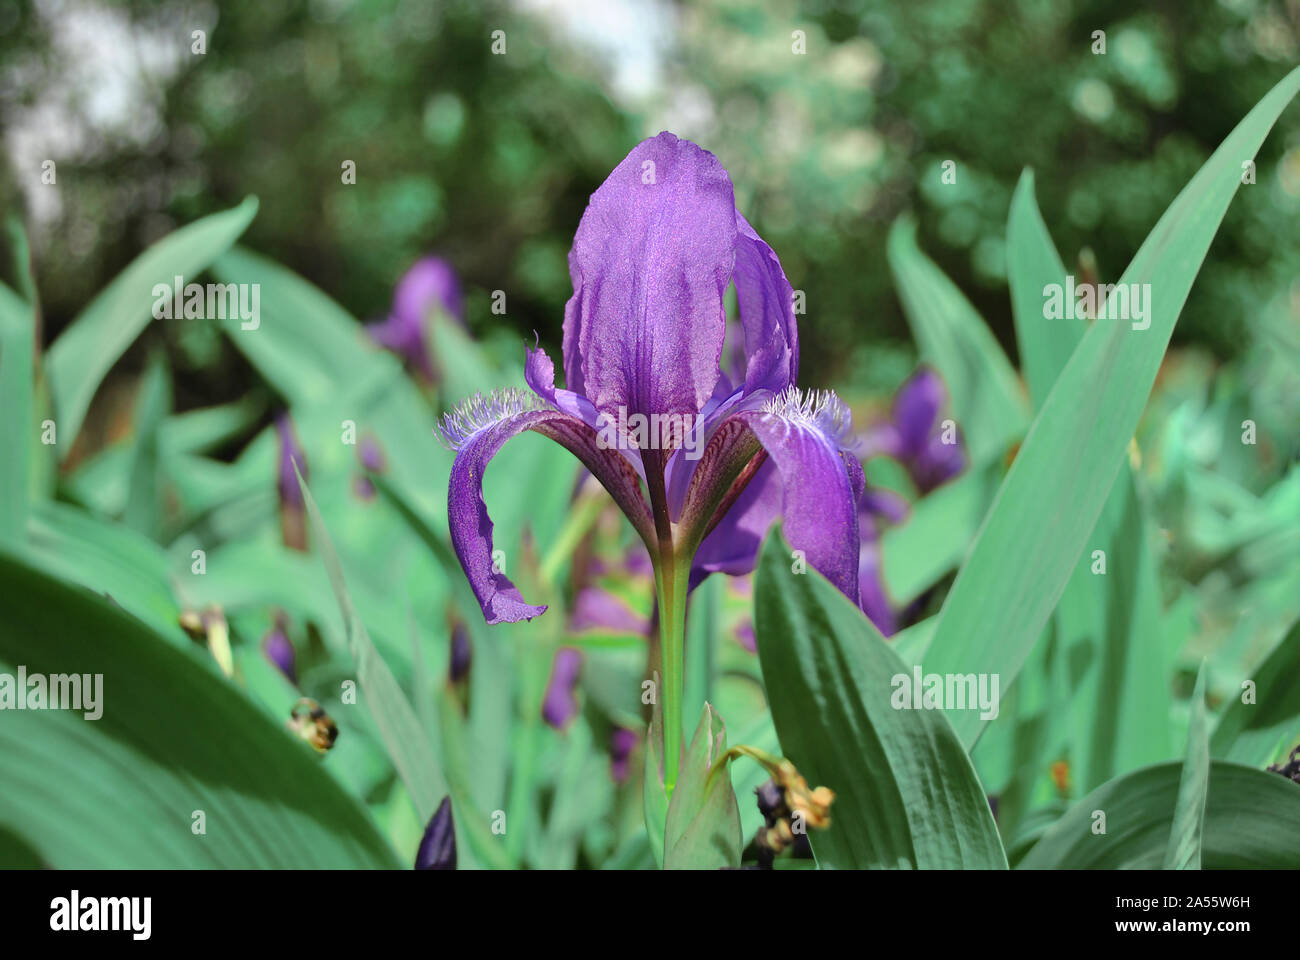 Purple iris flower blooming, blurry green leaves background Stock Photo